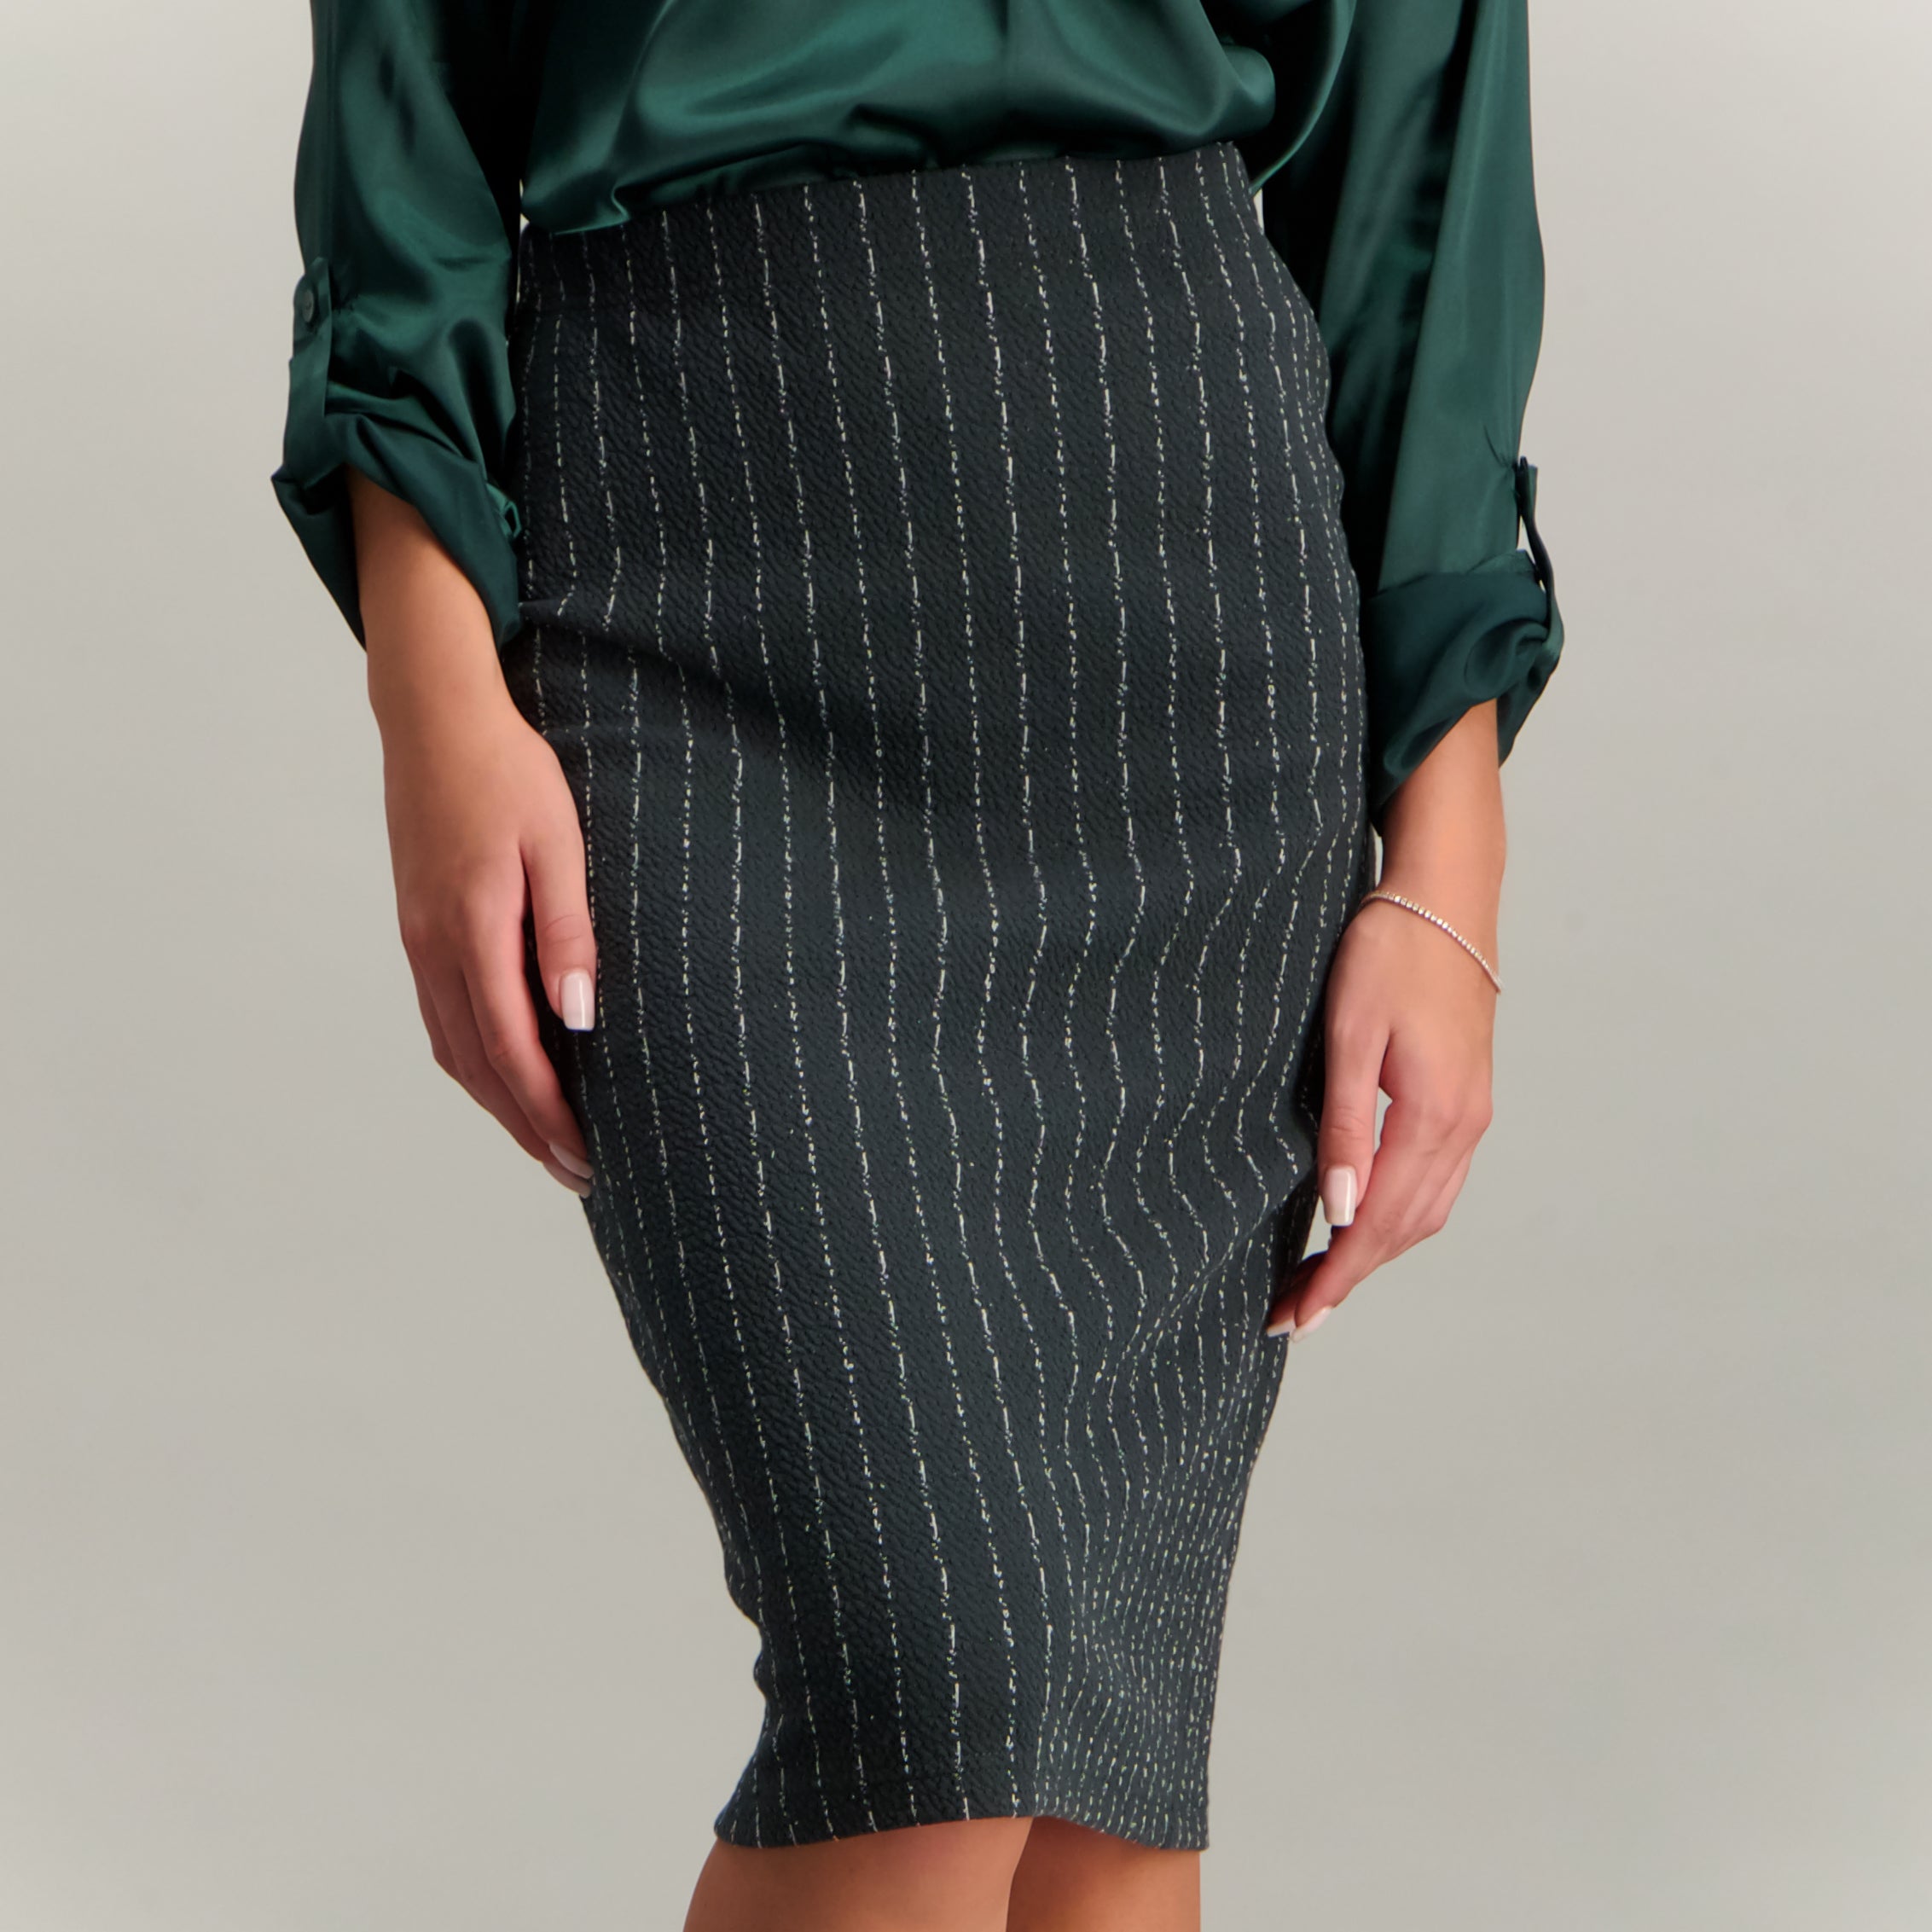 Alora Skirt With Stitching - Fashion Fusion 69.99 Fashion Fusion